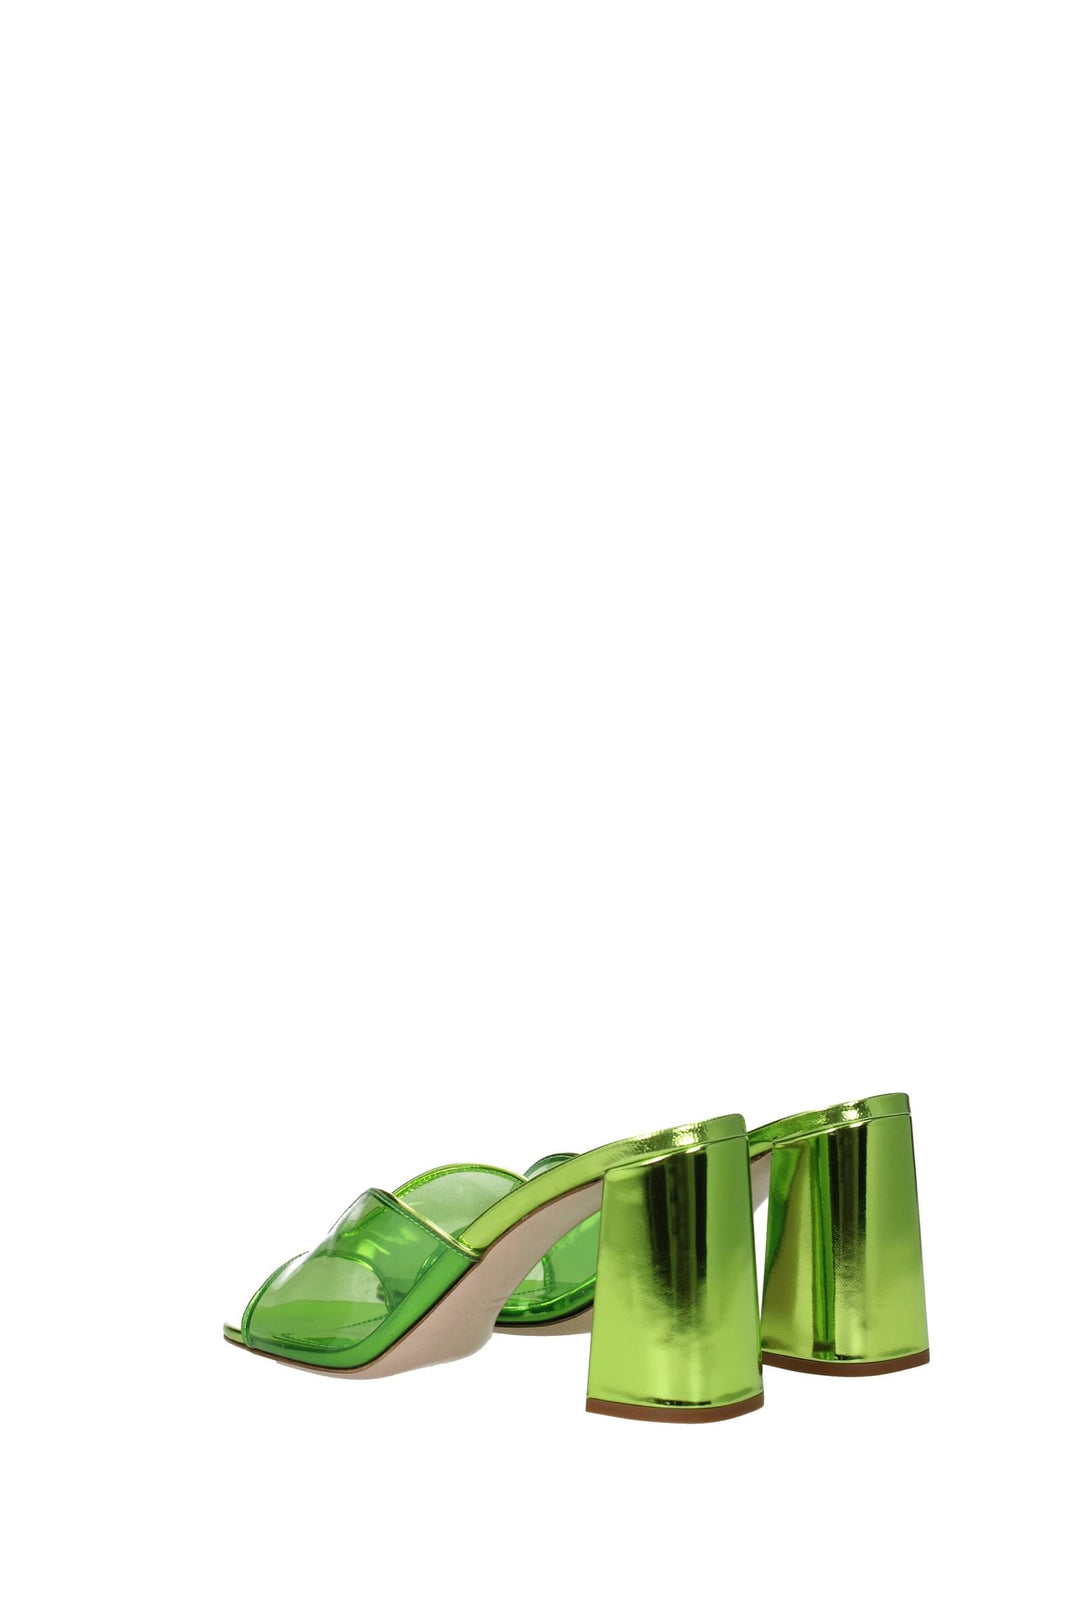 Sandali Plexiglass Verde - Miu Miu - Donna